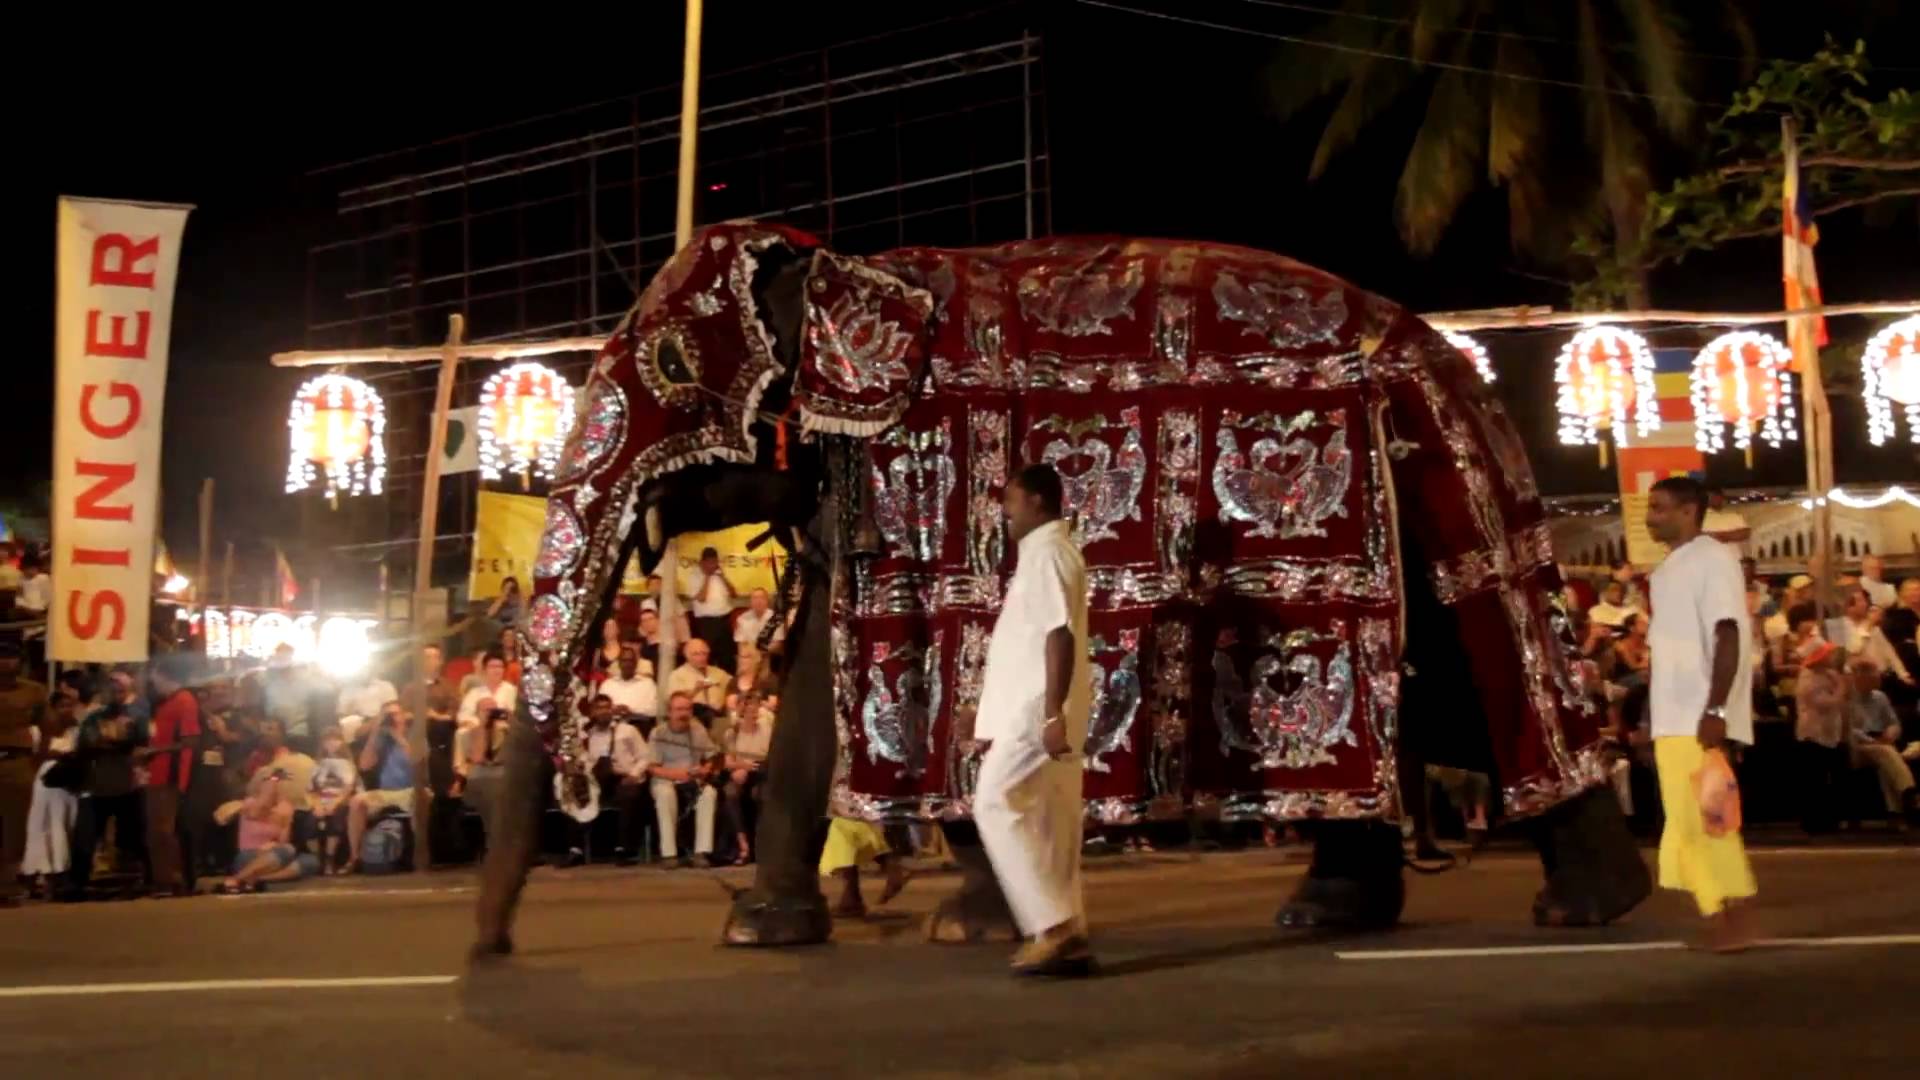 Elephant runs amok during procession injuring 31 people in Sri Lanka